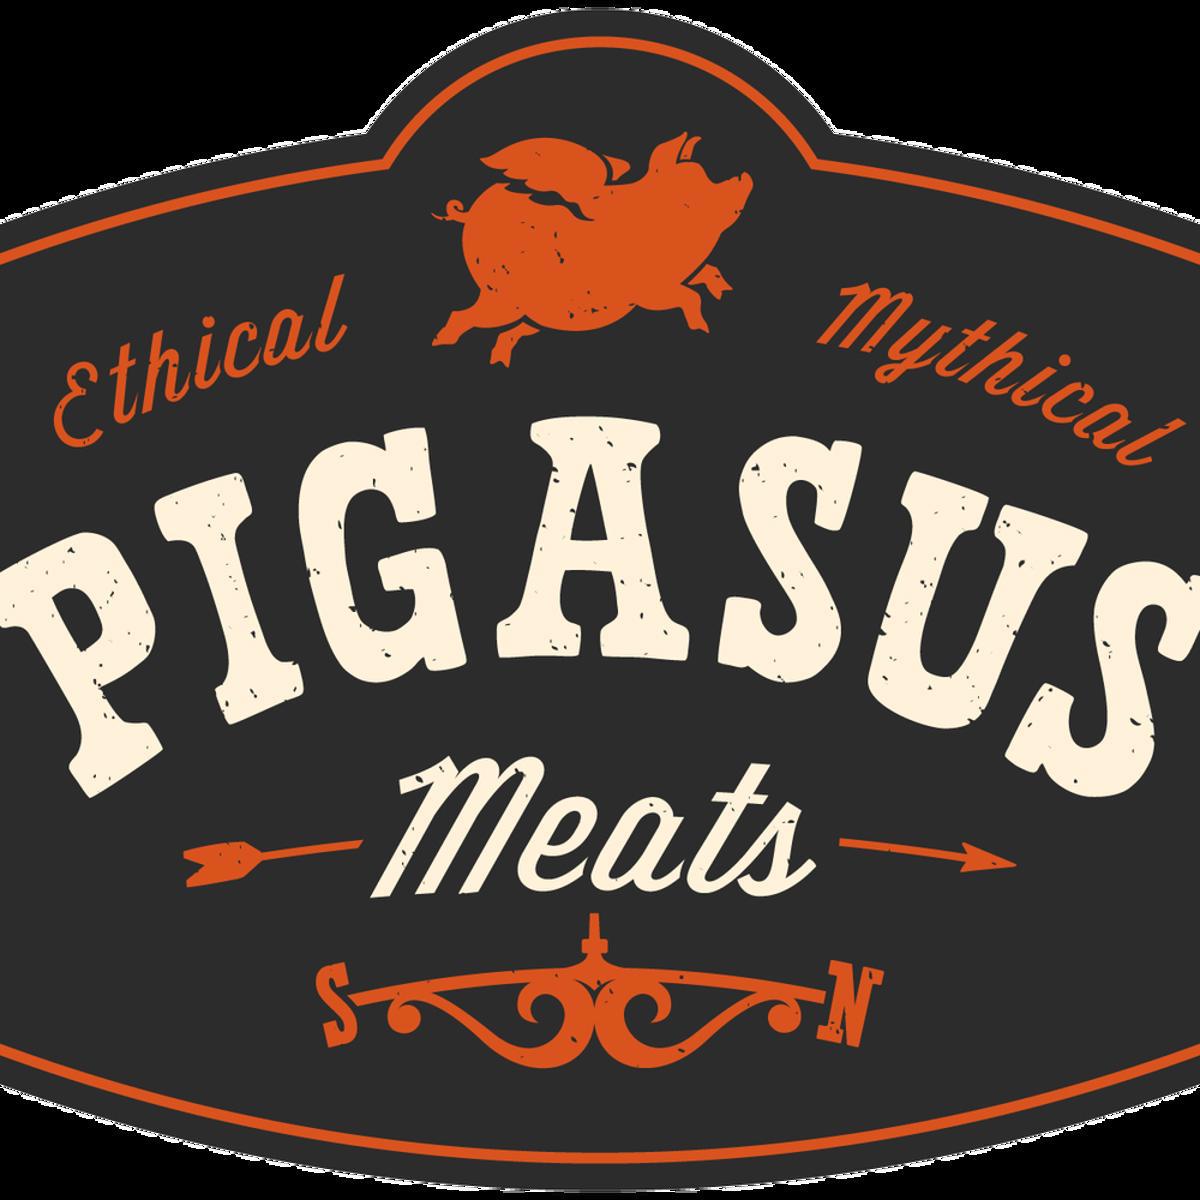 Pigasus Meats